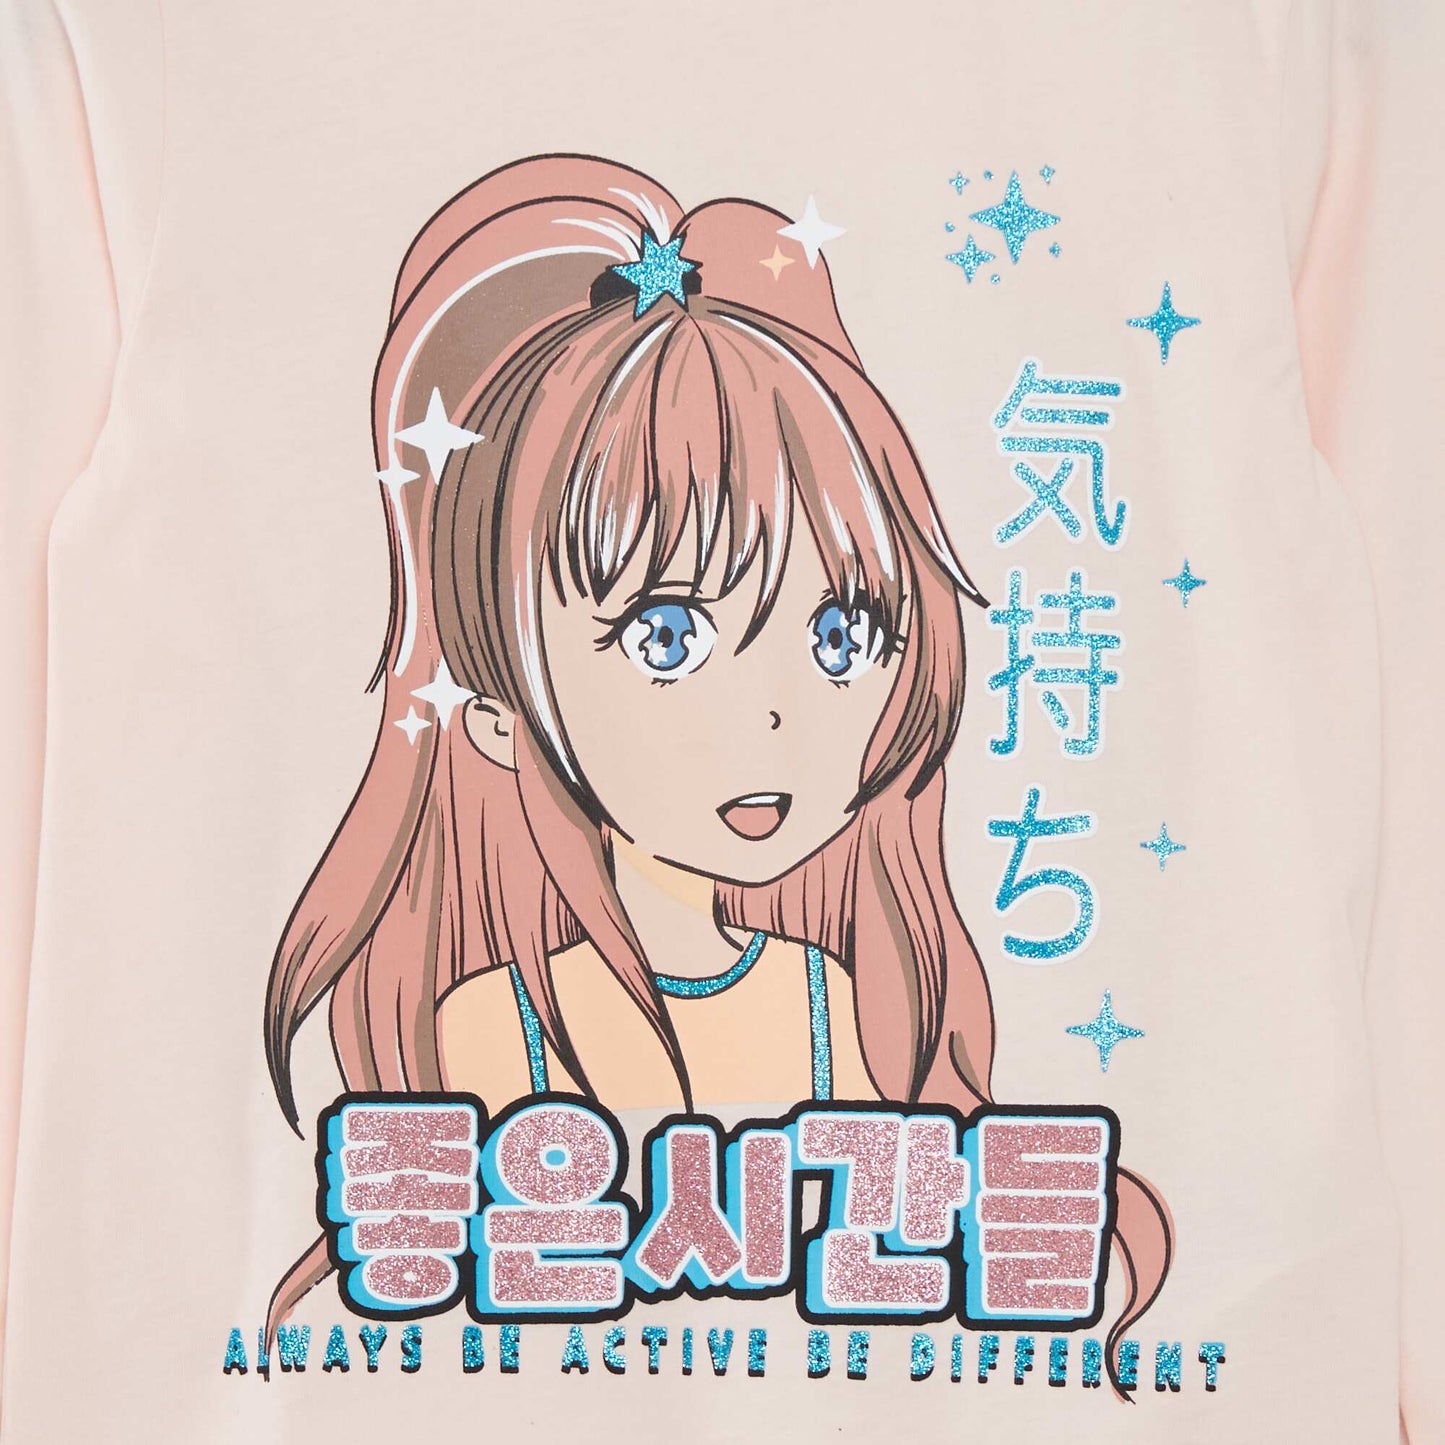 Long-sleeved 'Manga' T-shirt PINK